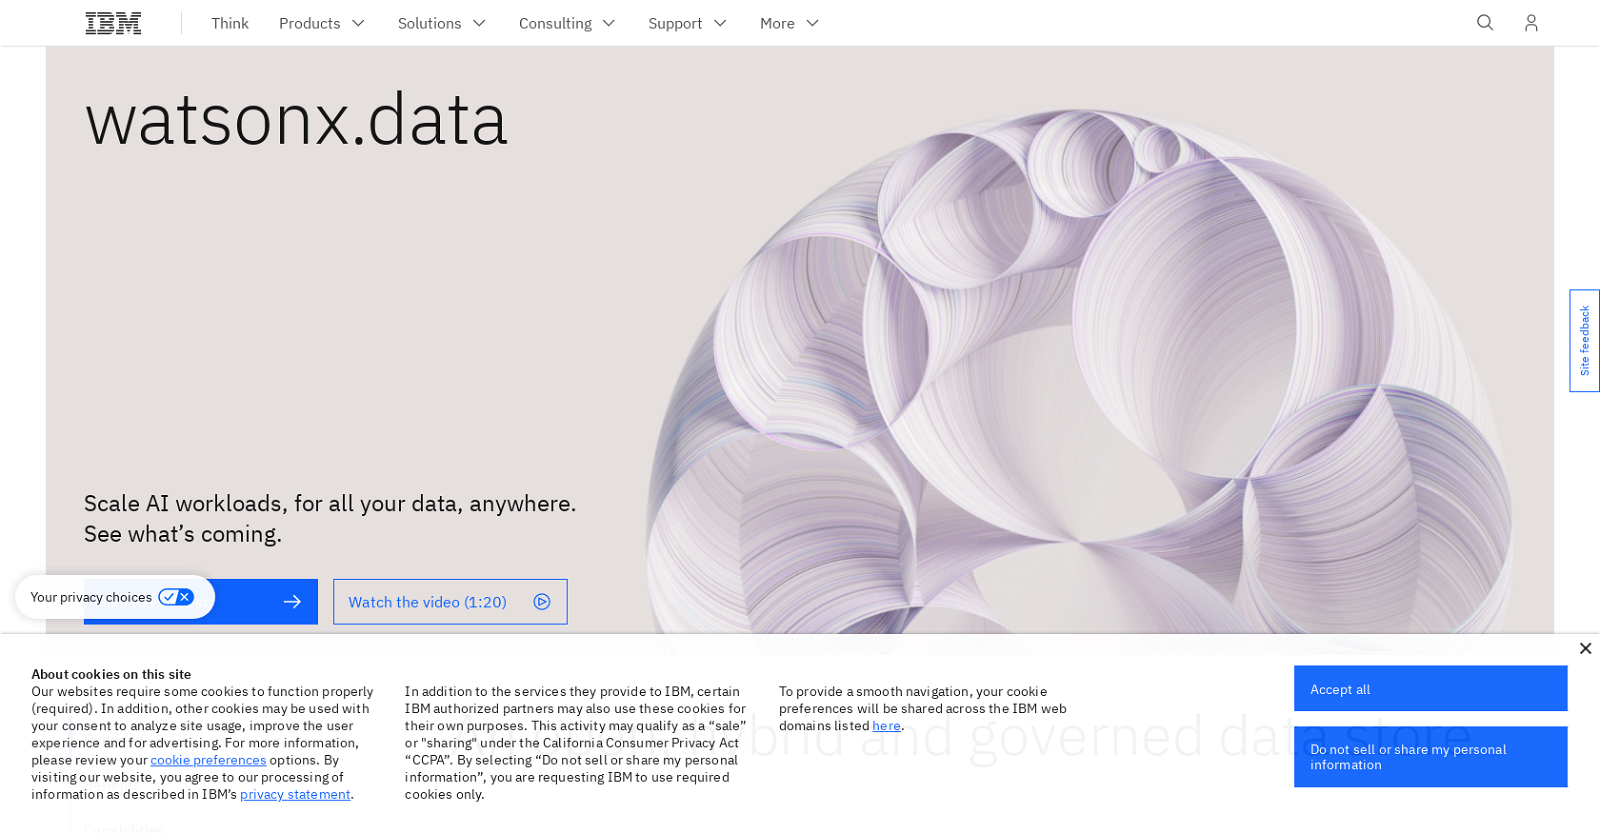 WatsonX.data by IBM